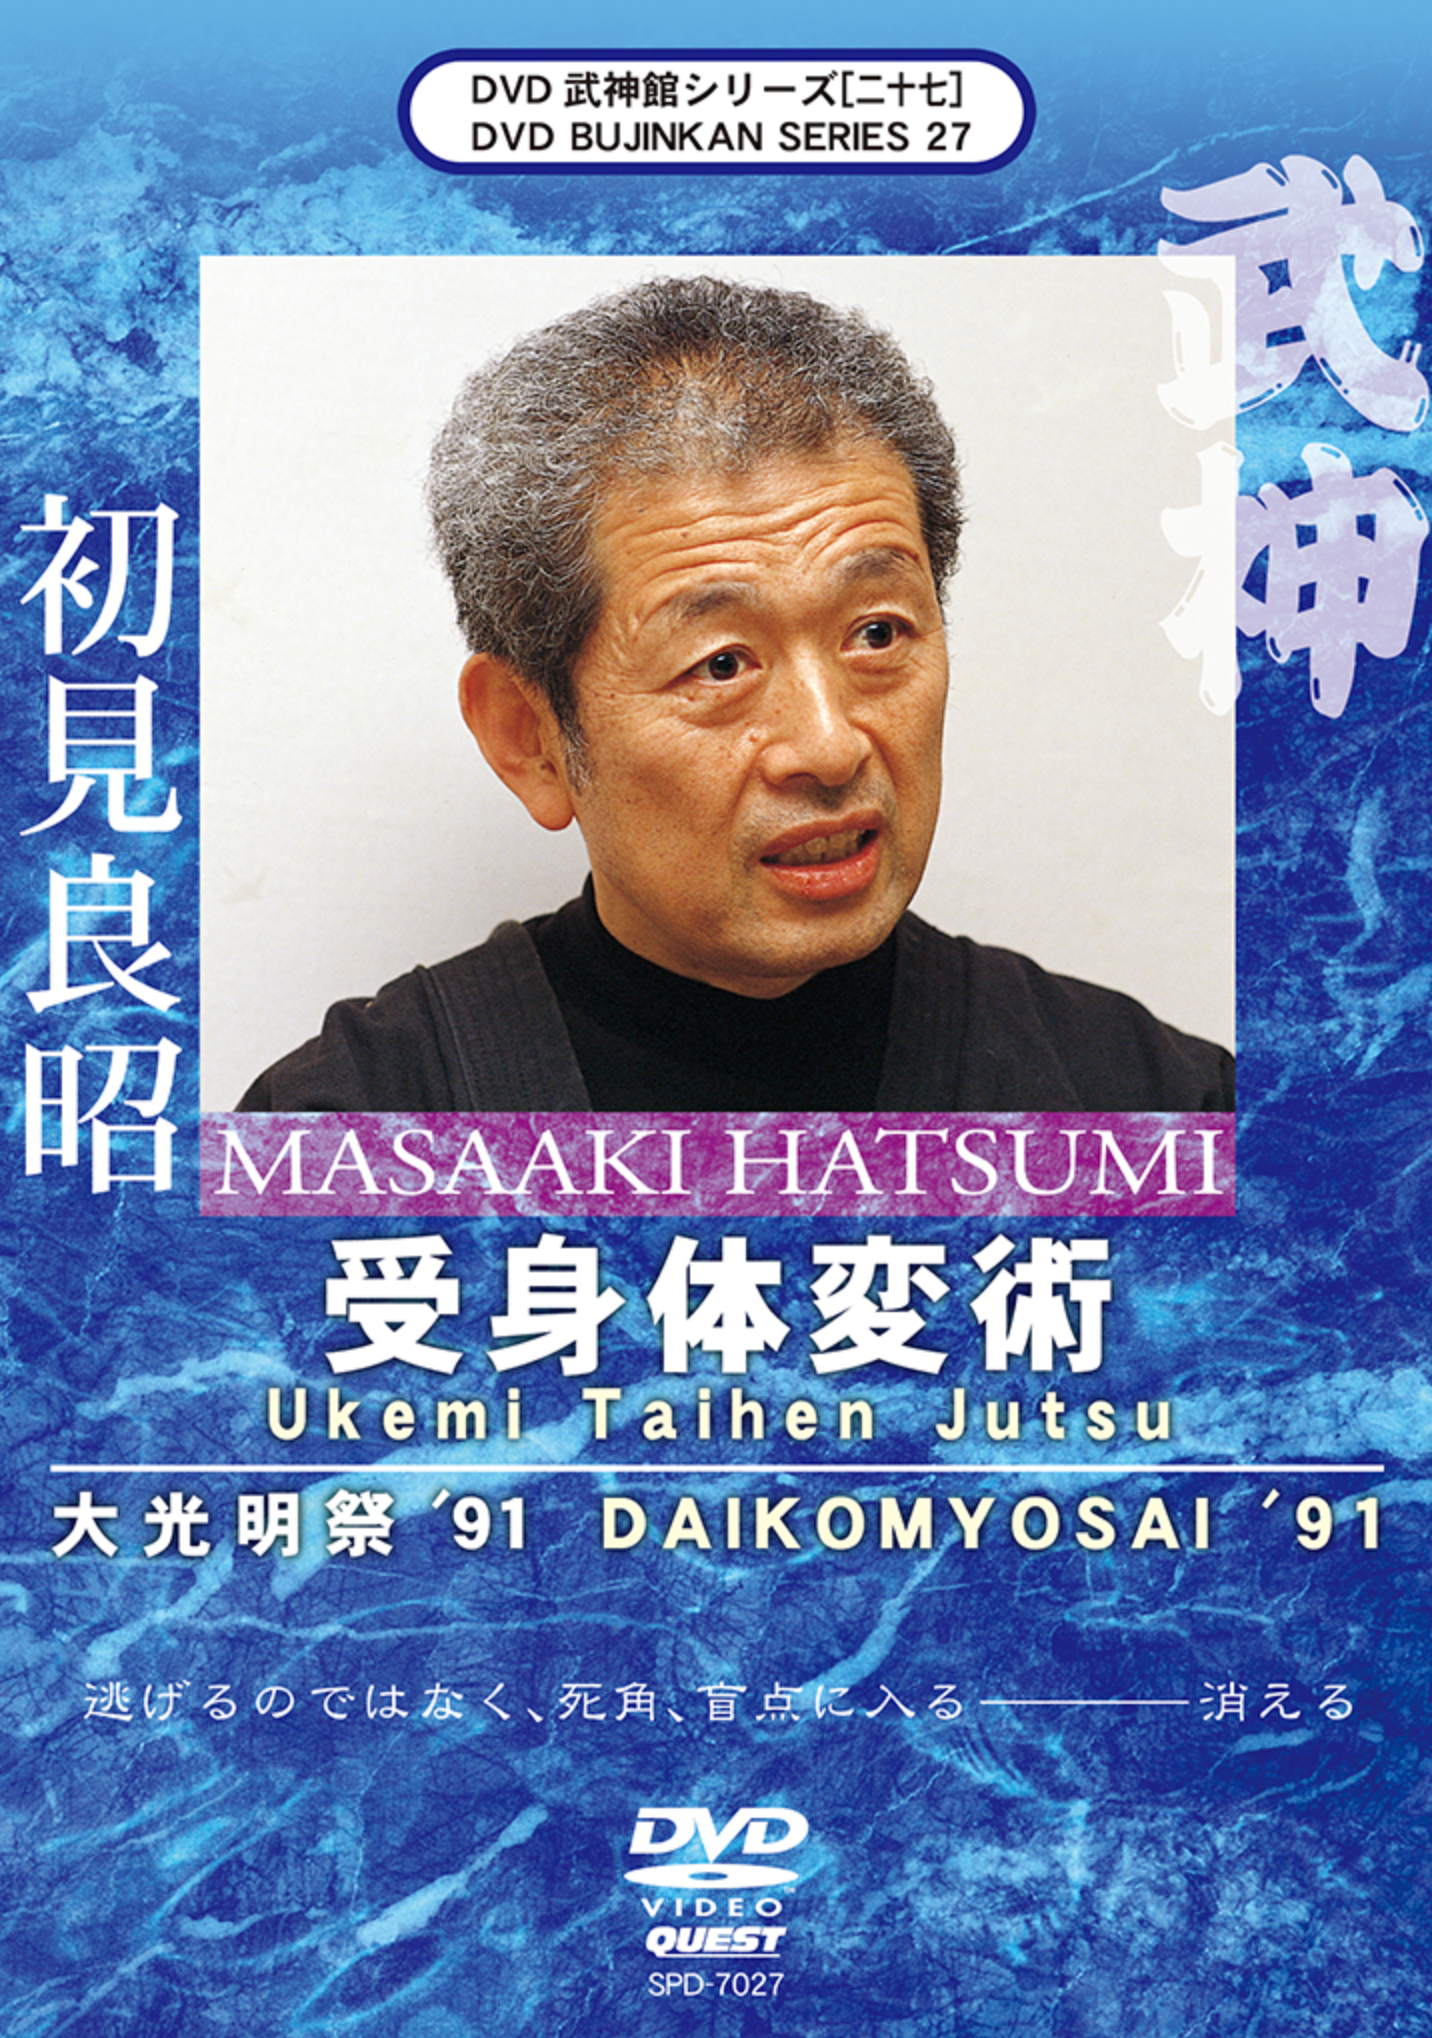 Bujinkan DVD Series 27: Ukemi Taihen Jutsu with Masaaki Hatsumi - Budovideos Inc